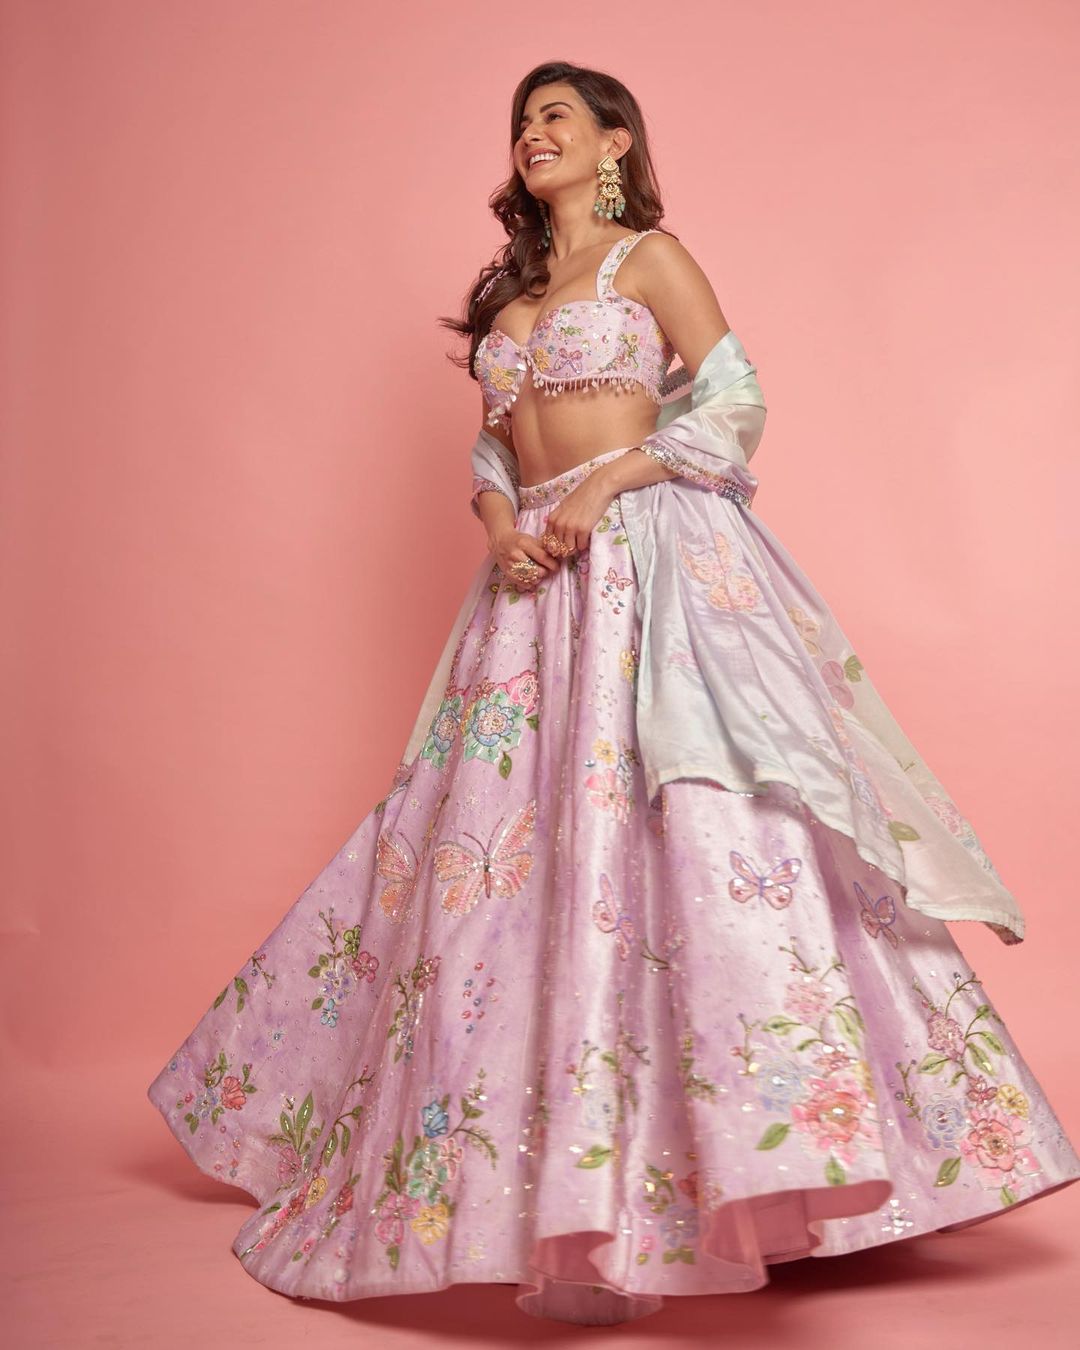 amyra dastur hot photos in grand dress getting viral on social media